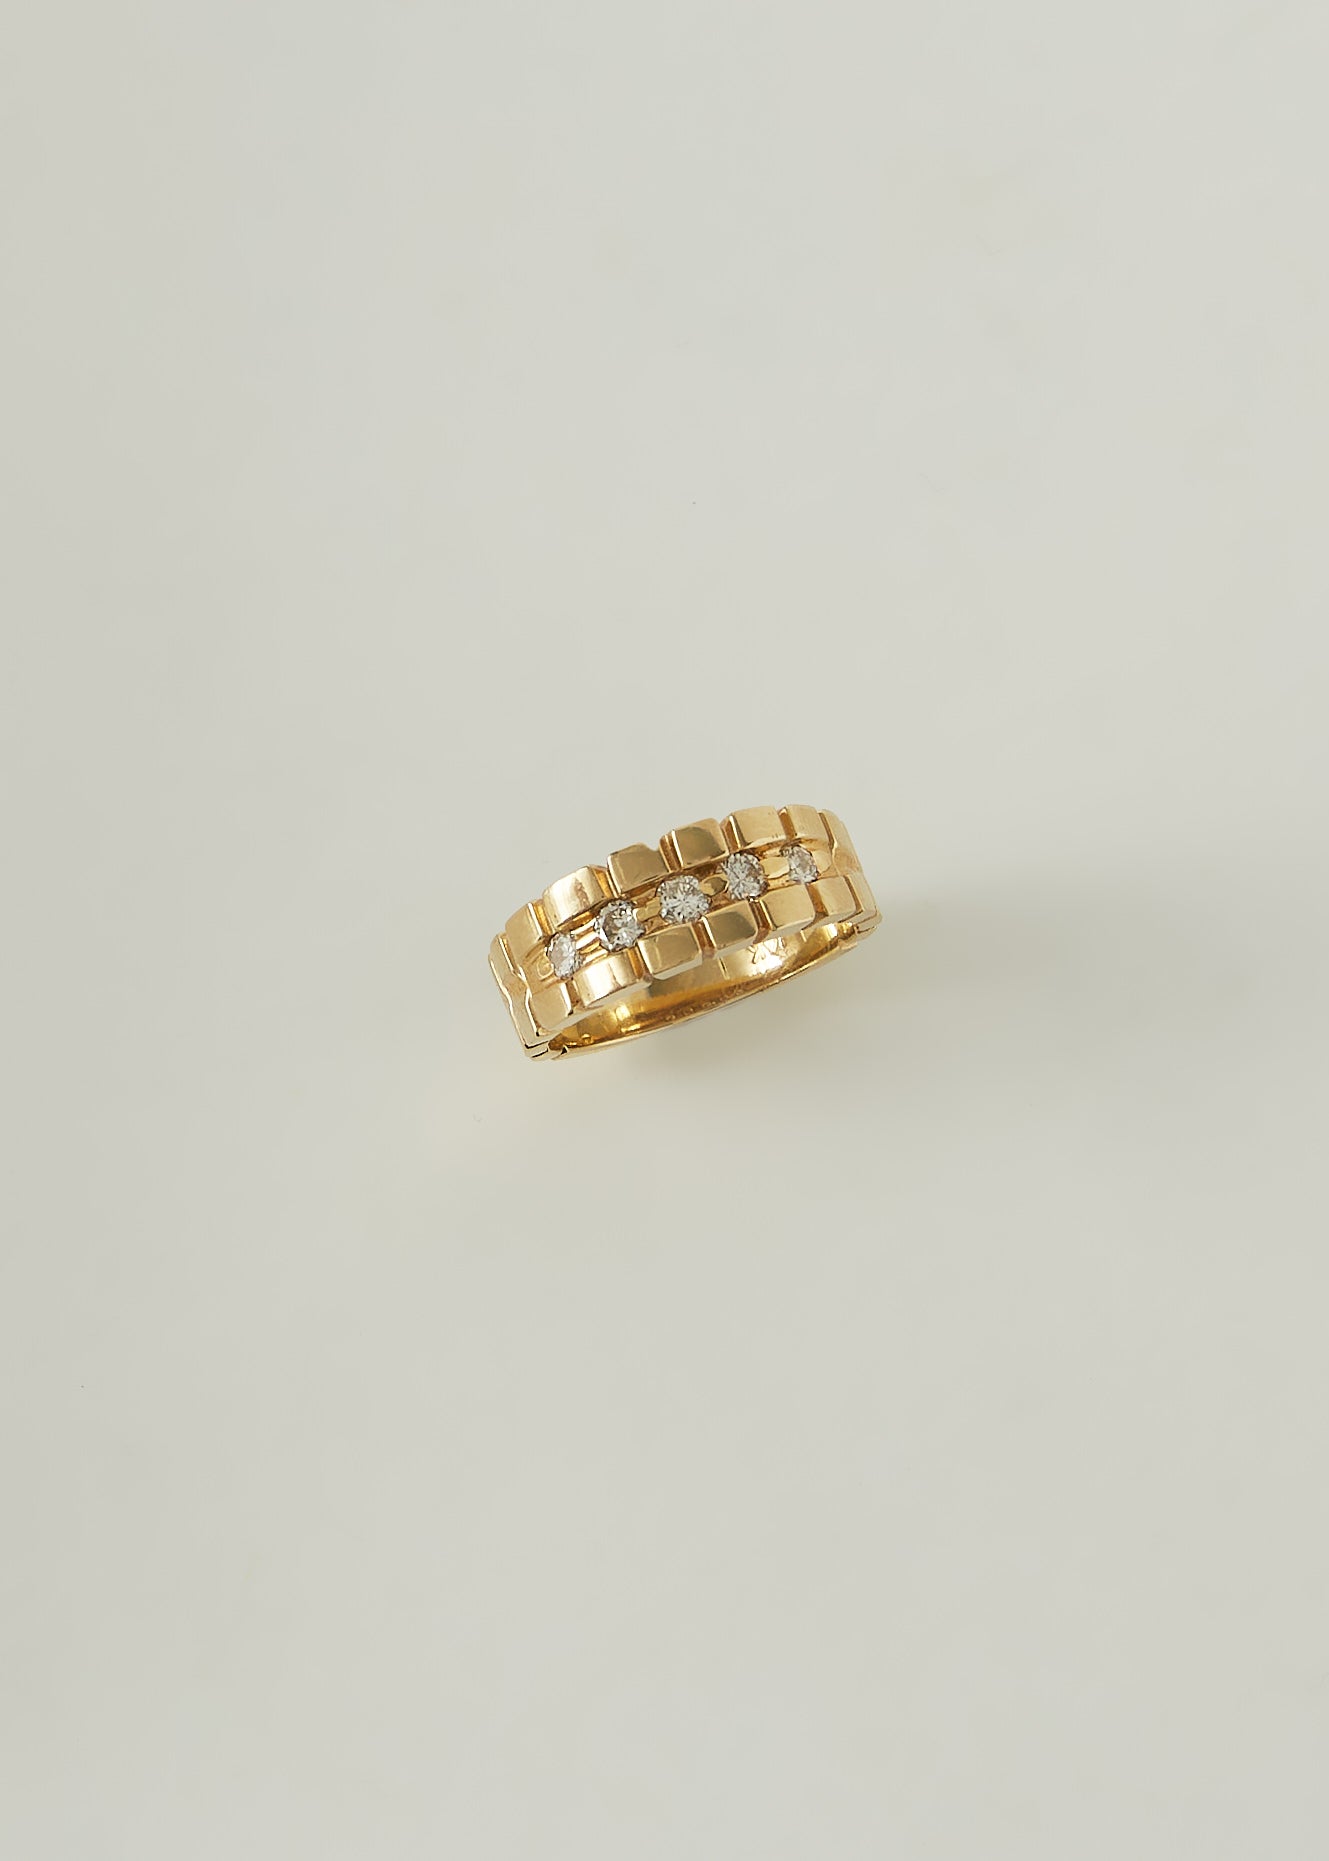 alt="Vintage Five Round Diamond Ring"